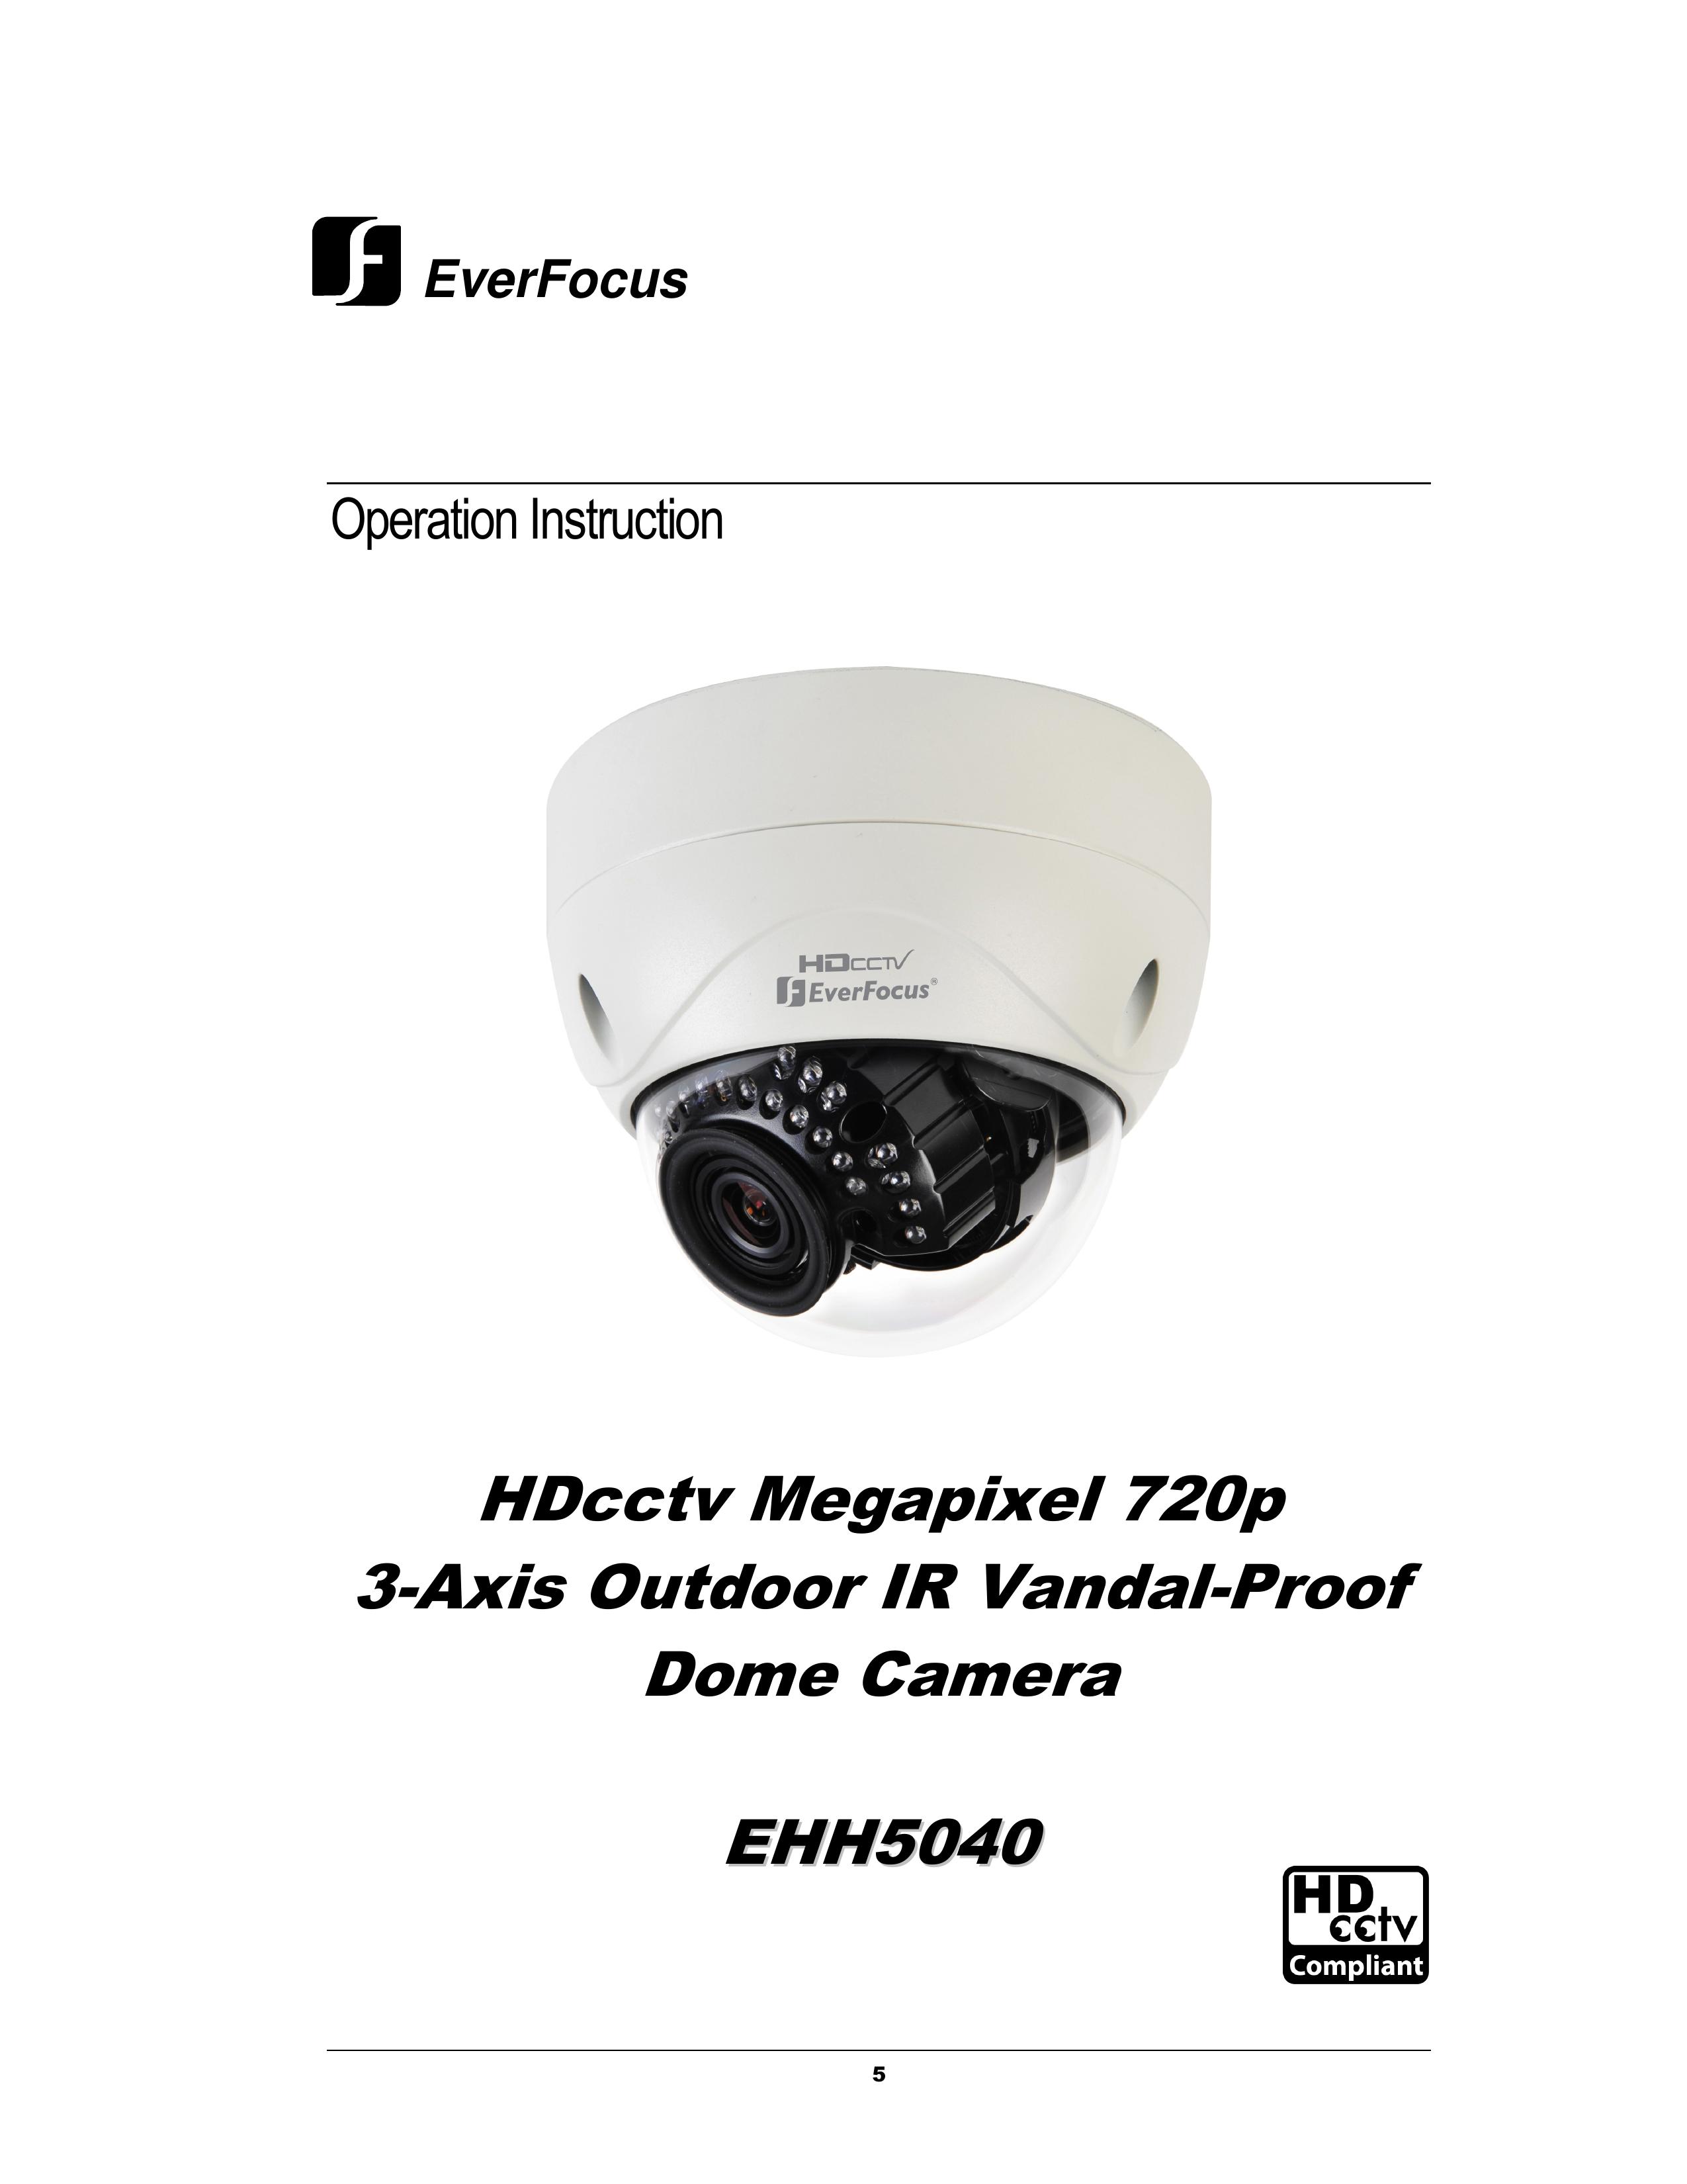 EverFocus EHH5040 Security Camera User Manual